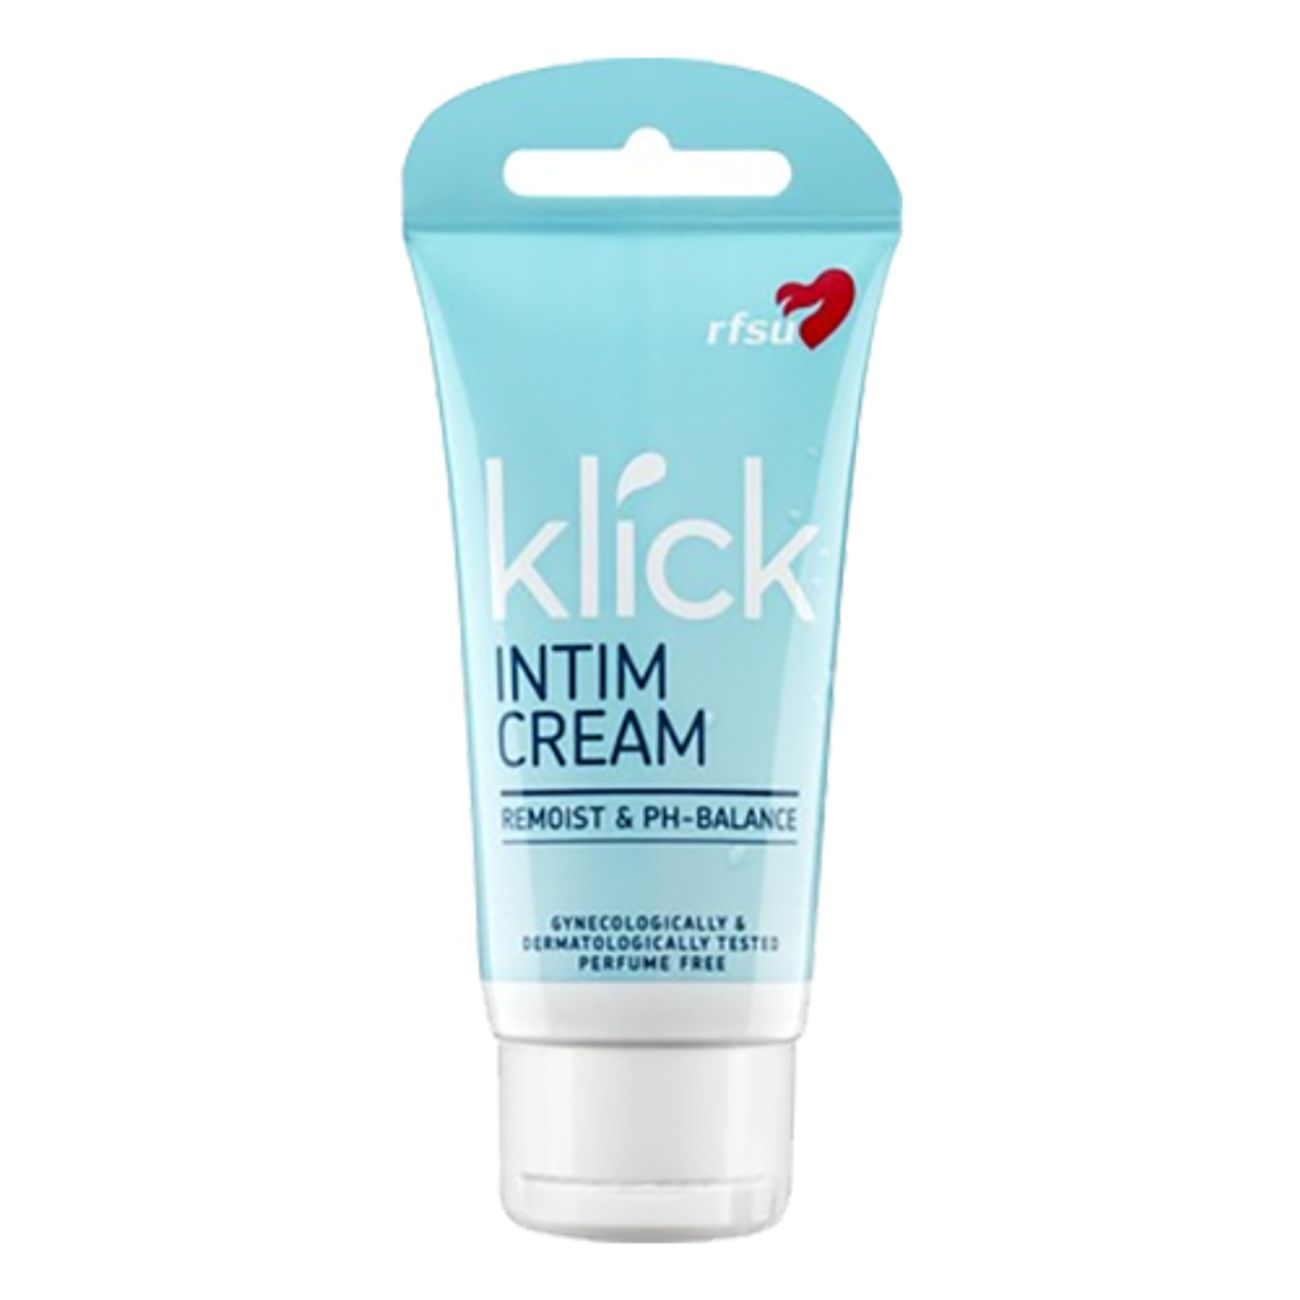 rfsu-klick-intim-cream-1